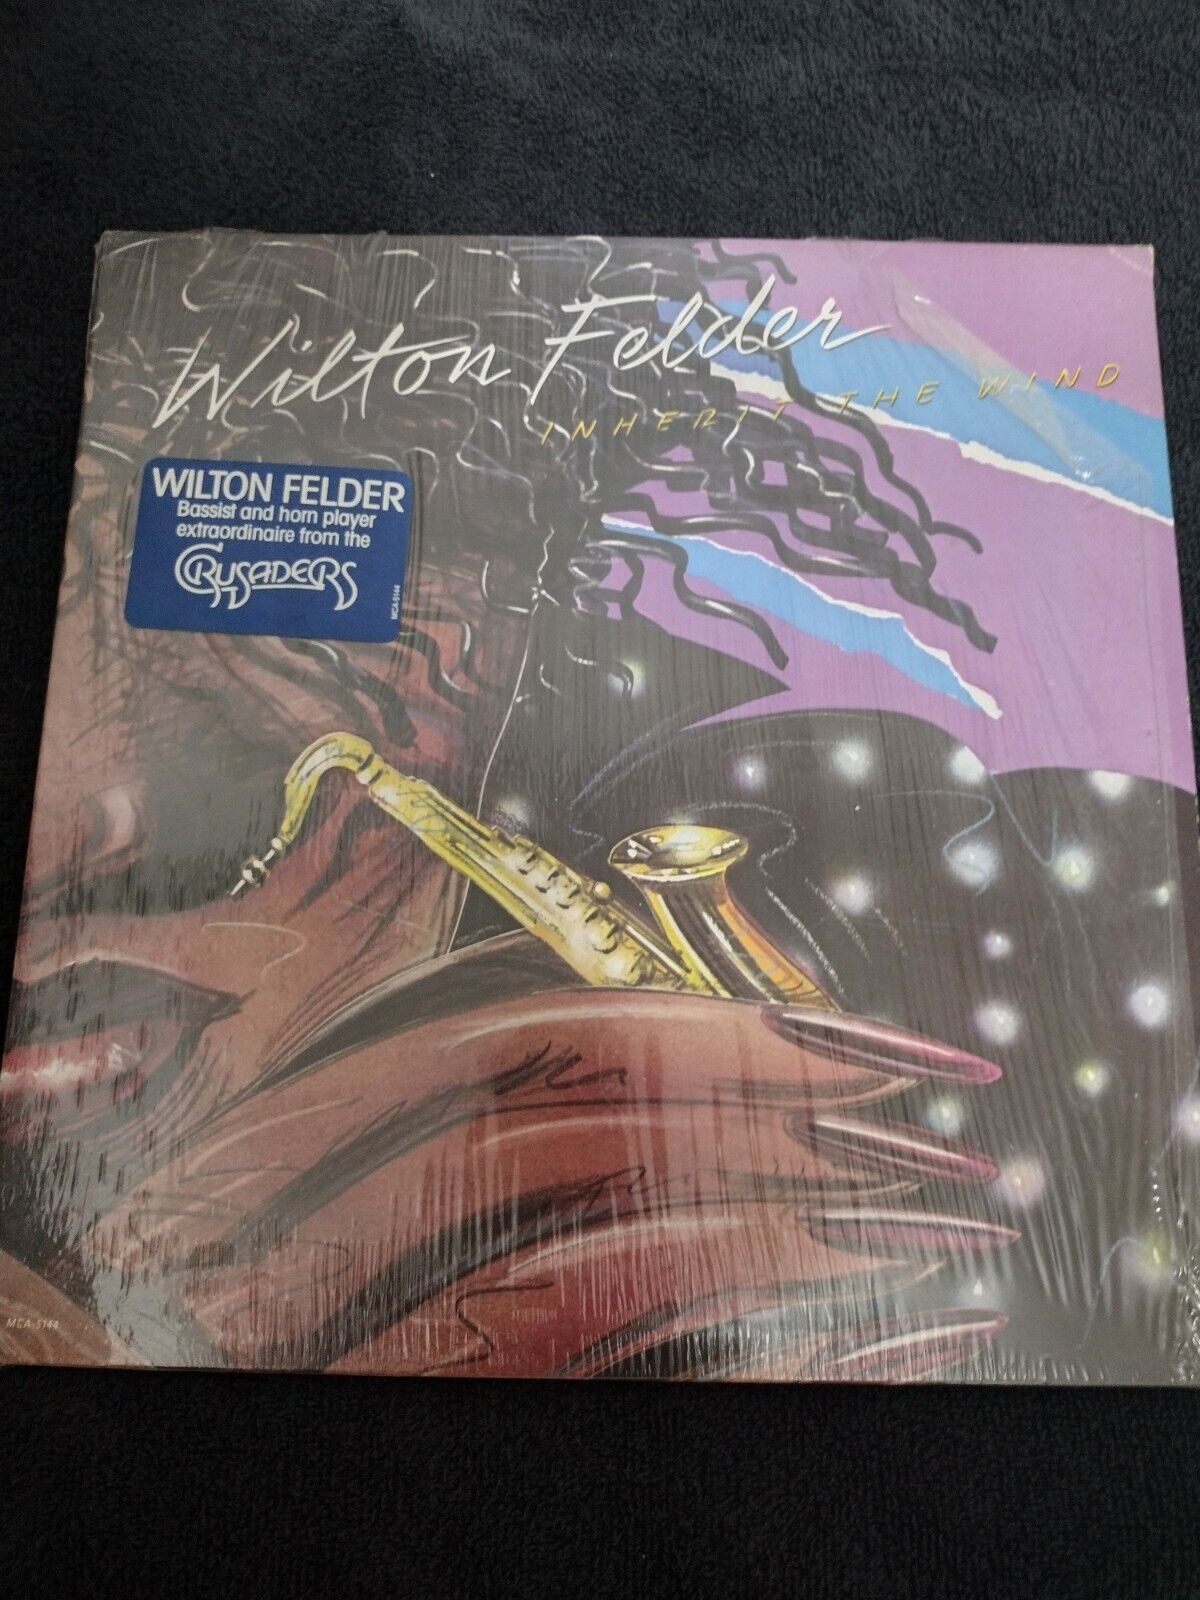 VINYL LP - FELDER,WILTON - INHERIT THE WIND - 1980 (ORIGINAL LP)